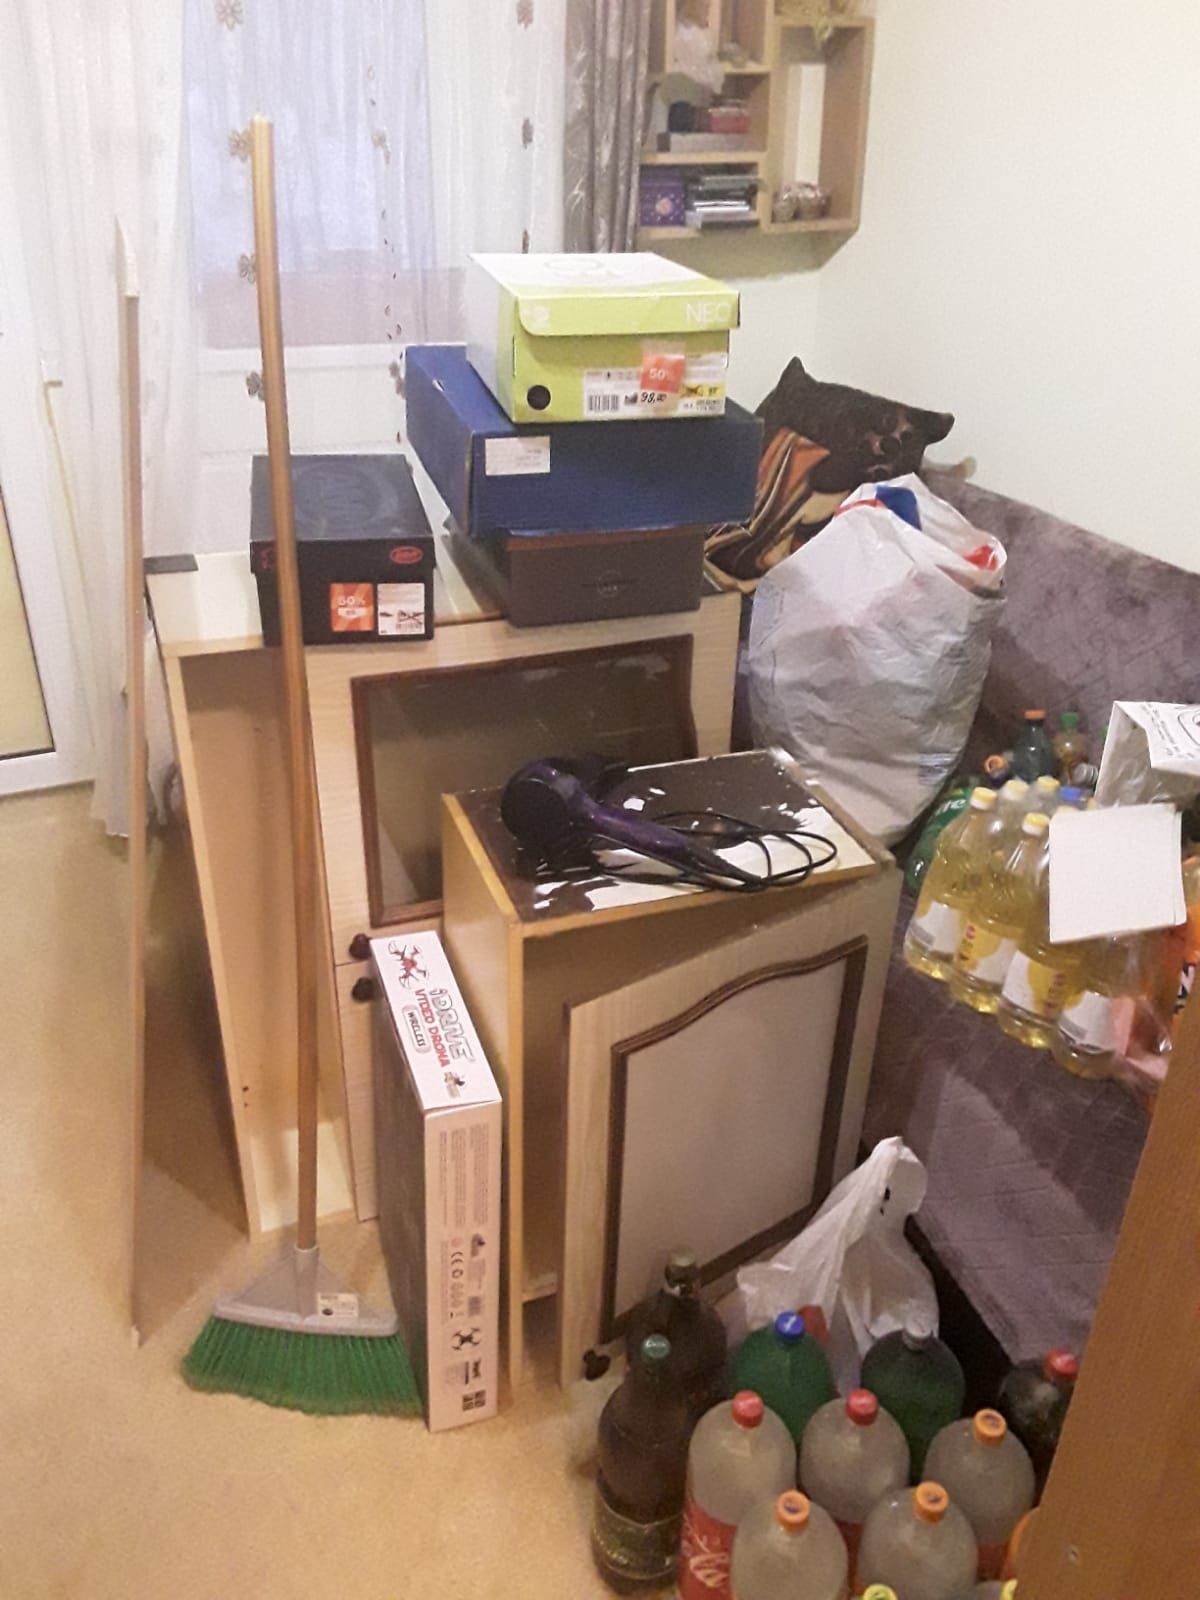 Debarasari apartamente, case,debarasare mobila veche